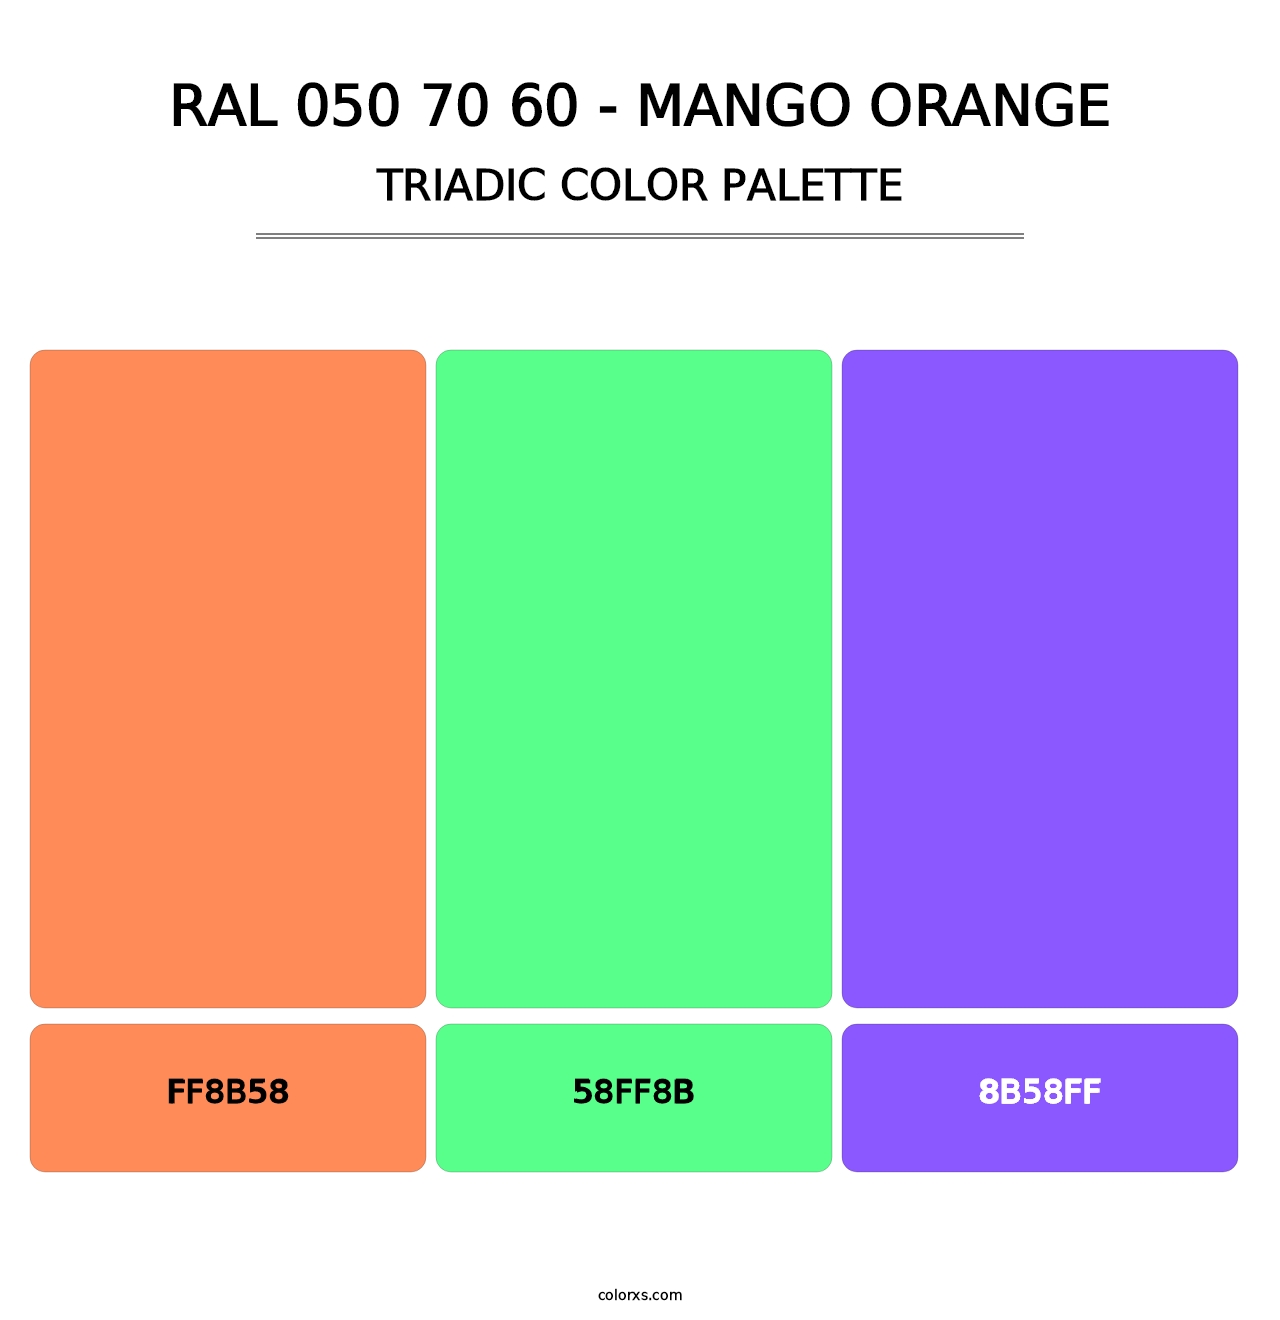 RAL 050 70 60 - Mango Orange - Triadic Color Palette